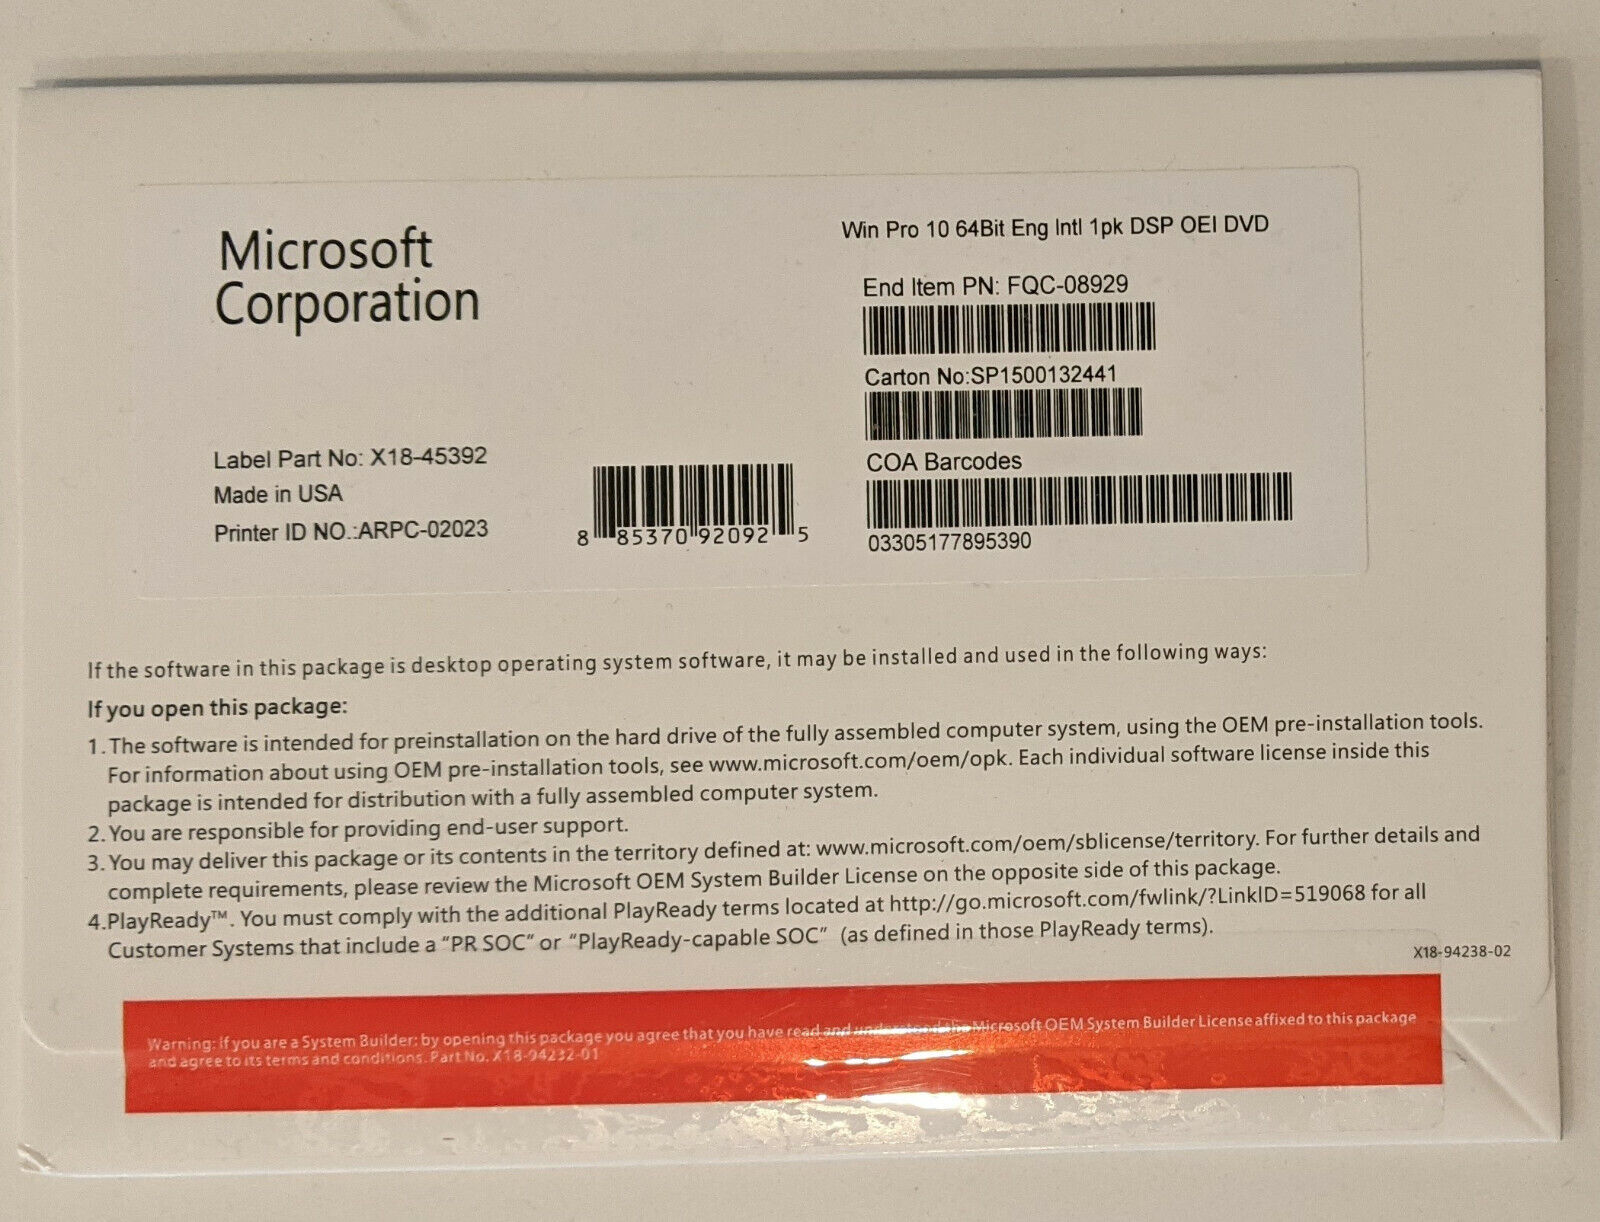 Microsoft Windows Win 10 Professional English 64bit DVD free ship - new